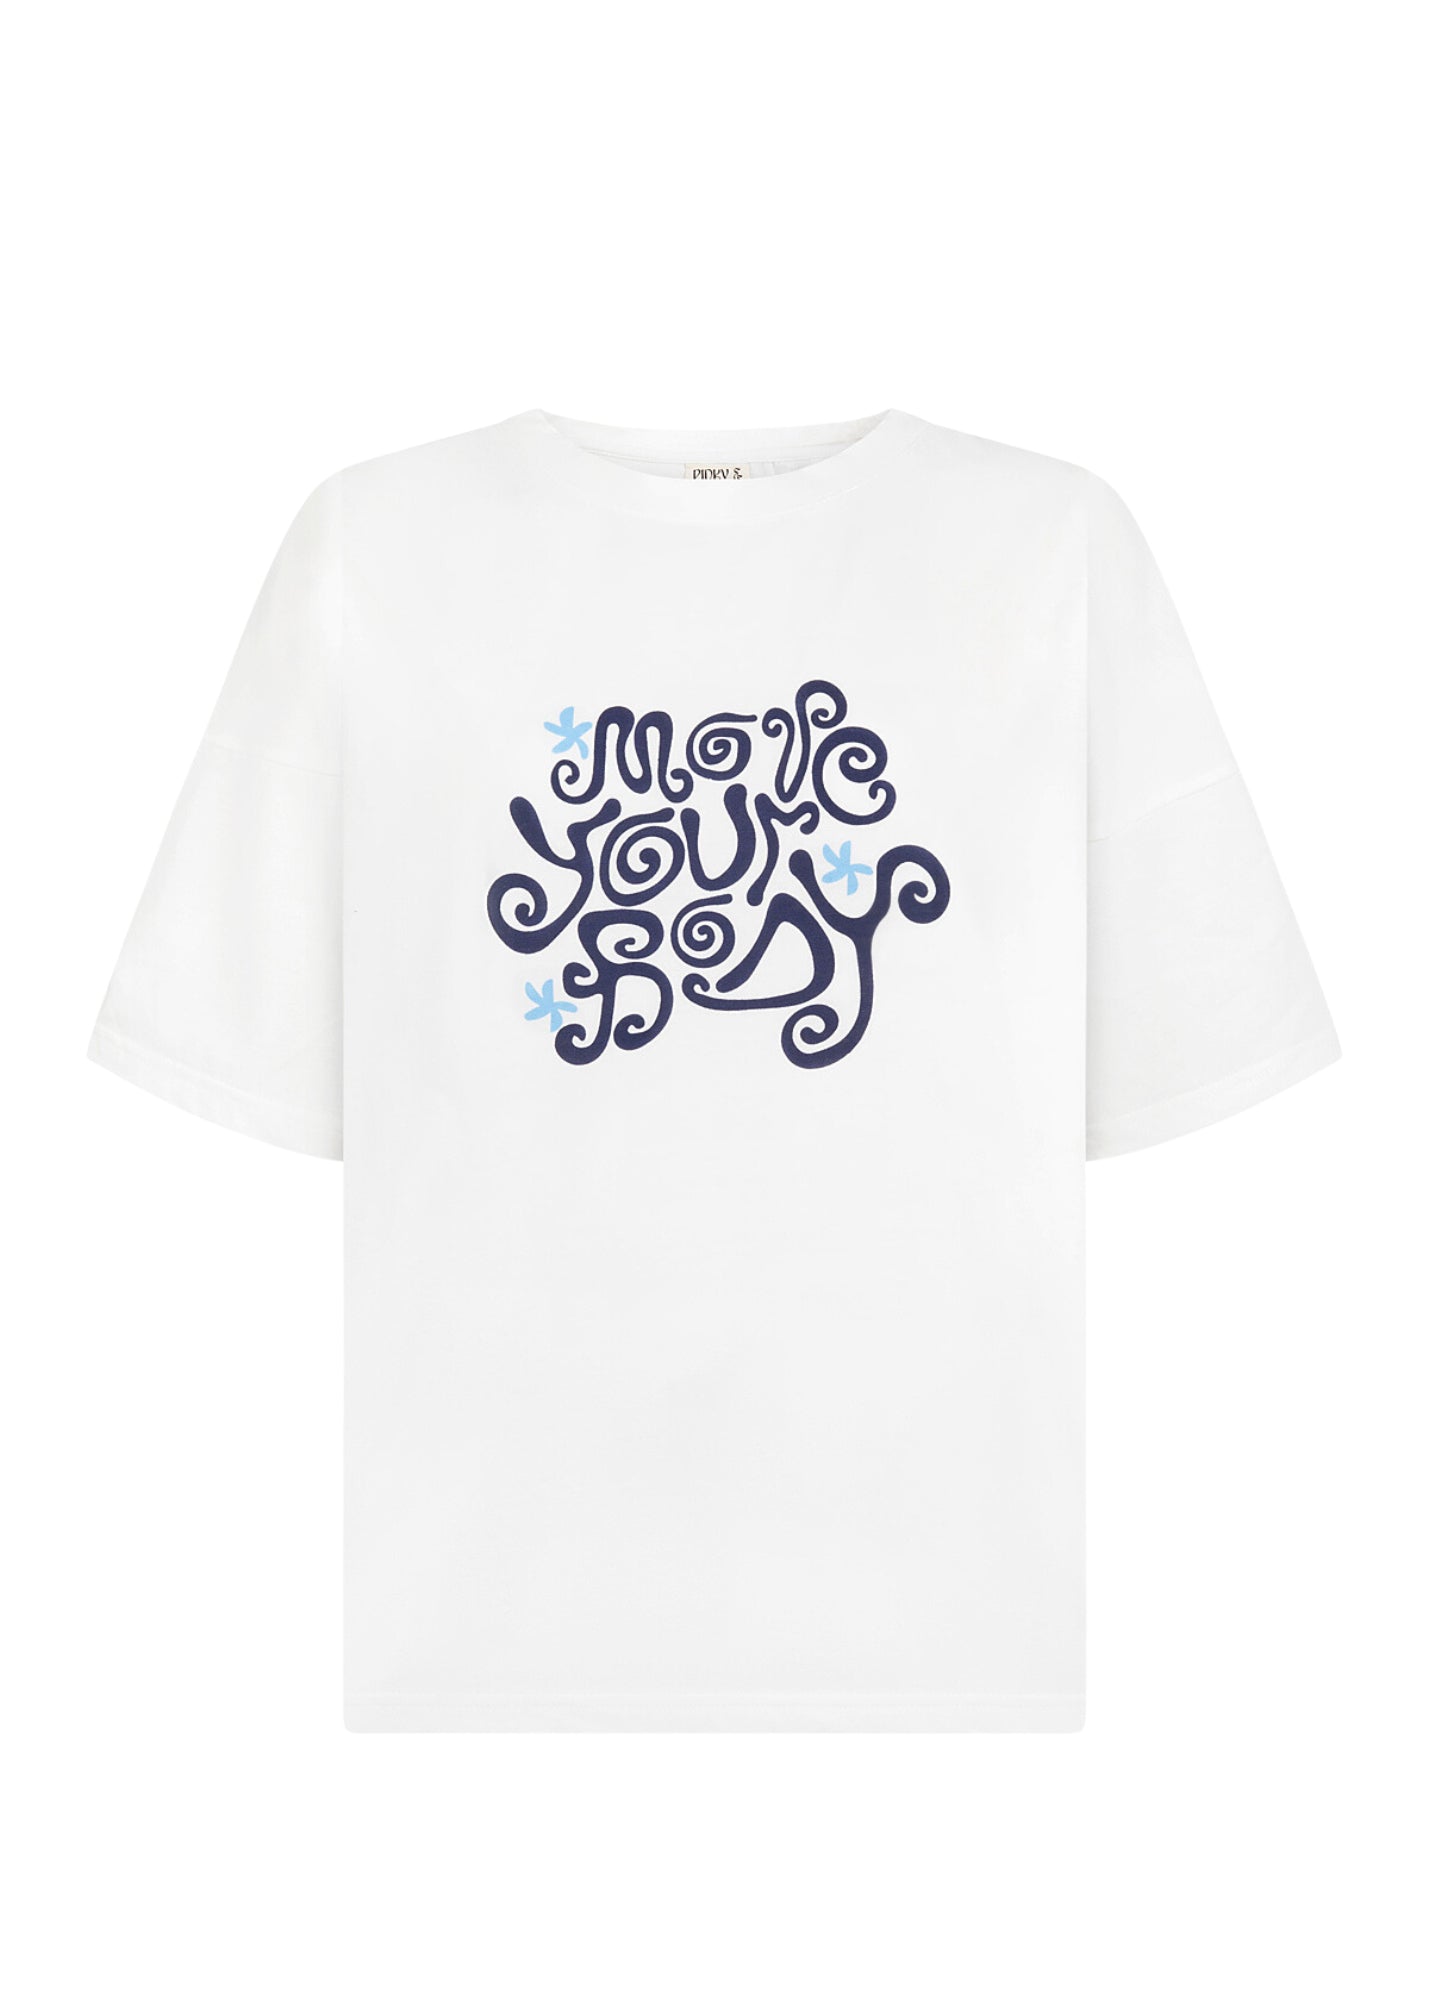 Oversized Swirly Move Your Body T-Shirt - White/Blues-Pinky & Kamal-stride